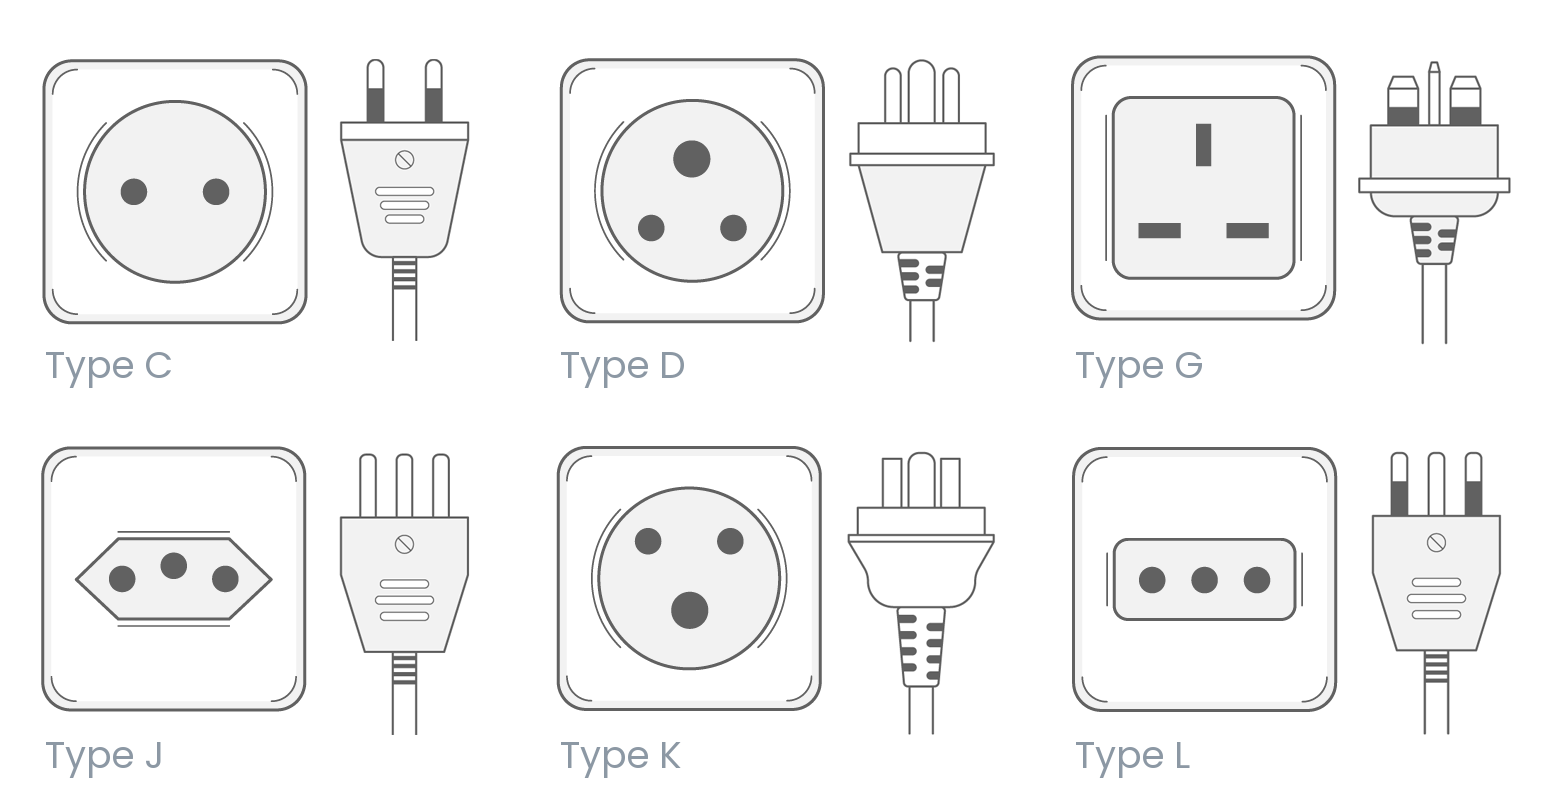 Maldives power plug outlet type G